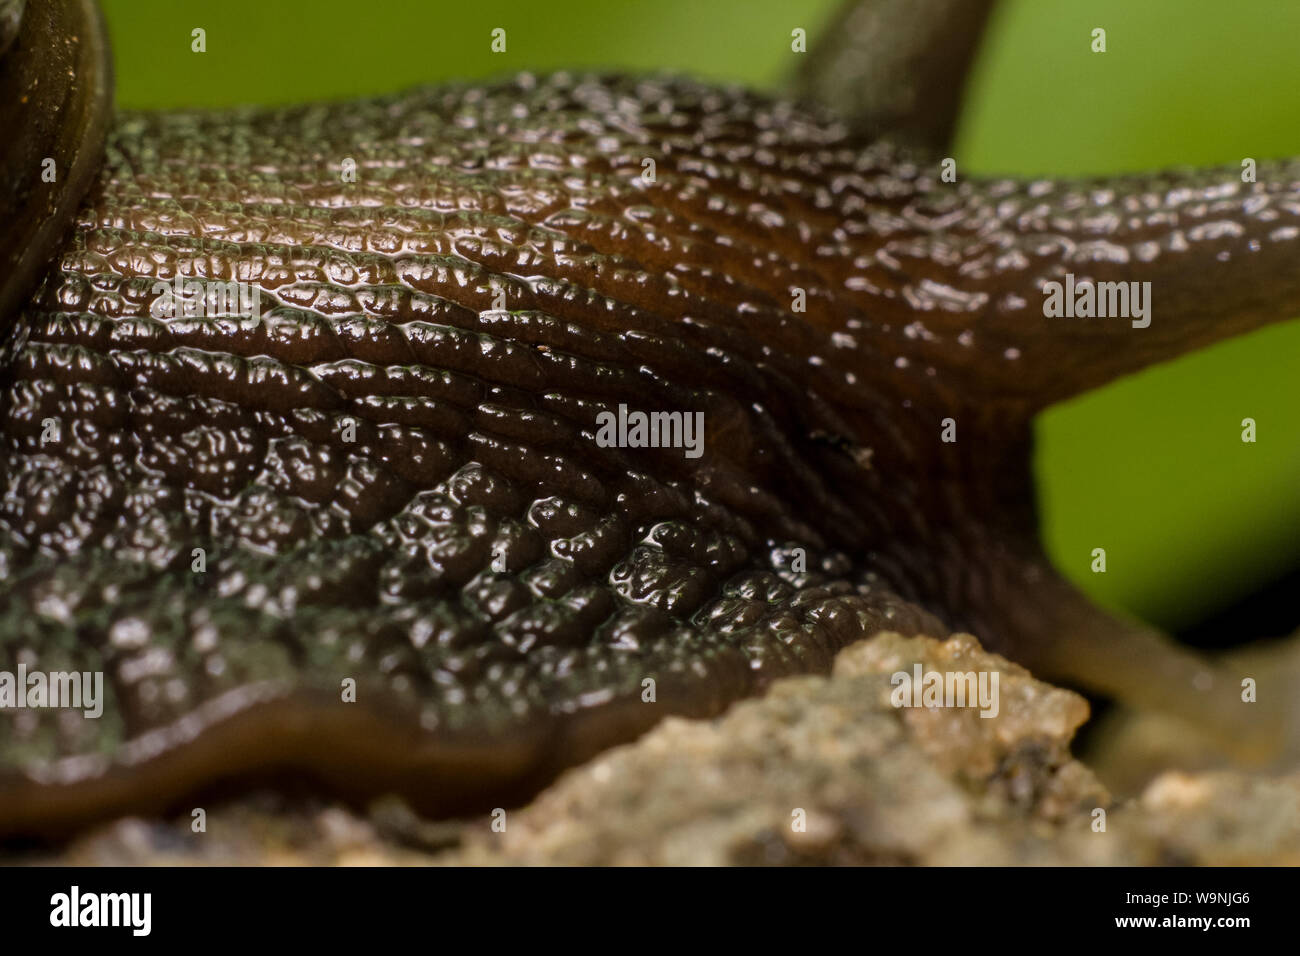 Texture of a snail skin, extreme invertebrate macro Stock Photo